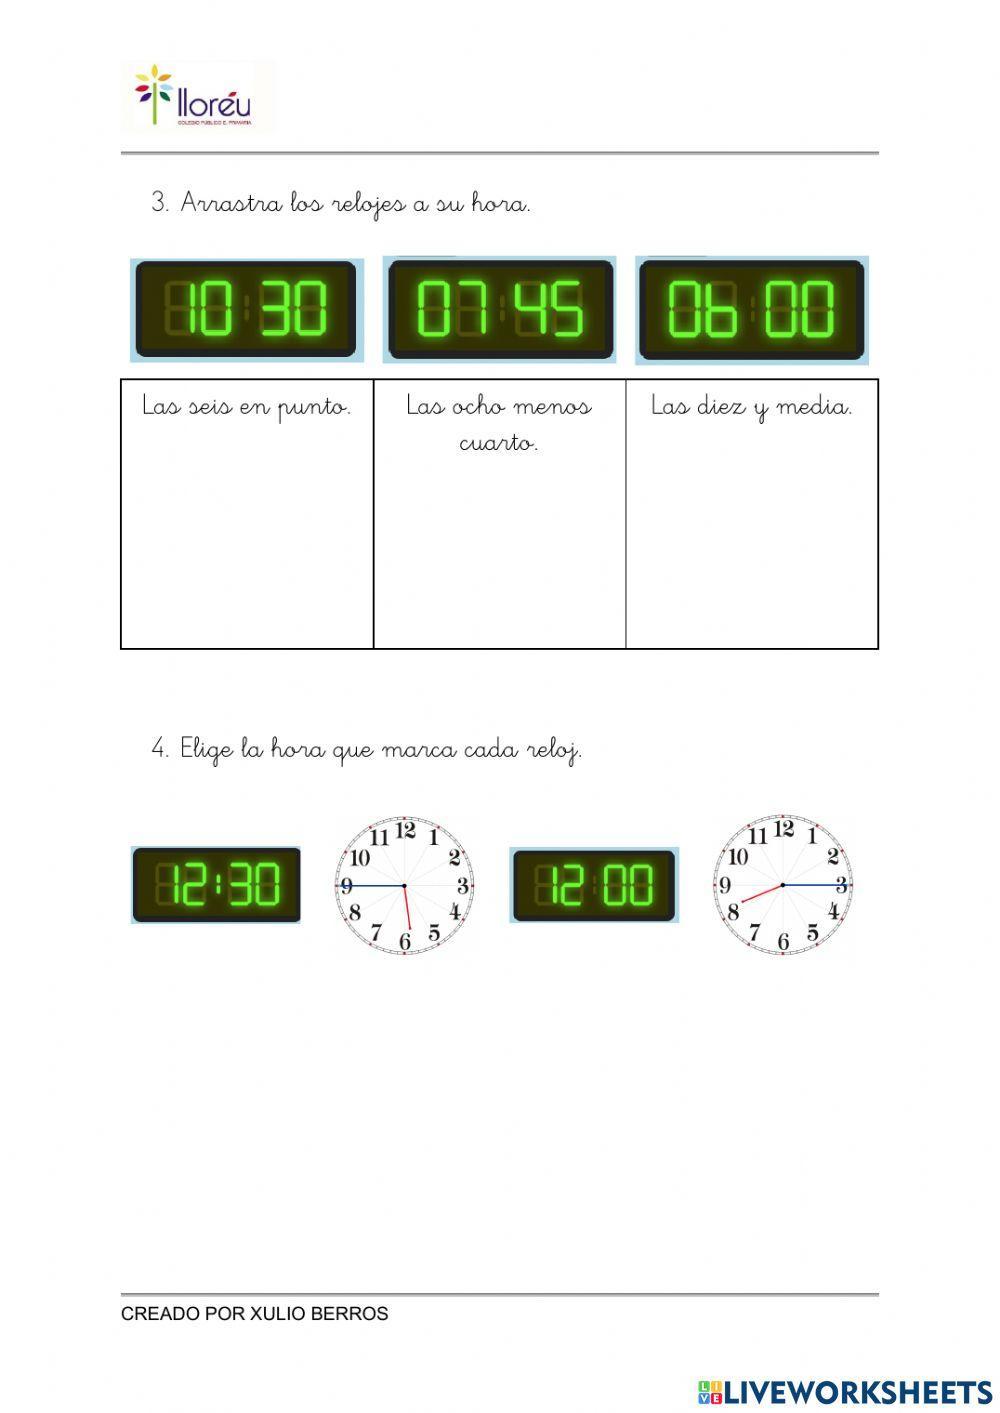 Reloj analógico y reloj digital